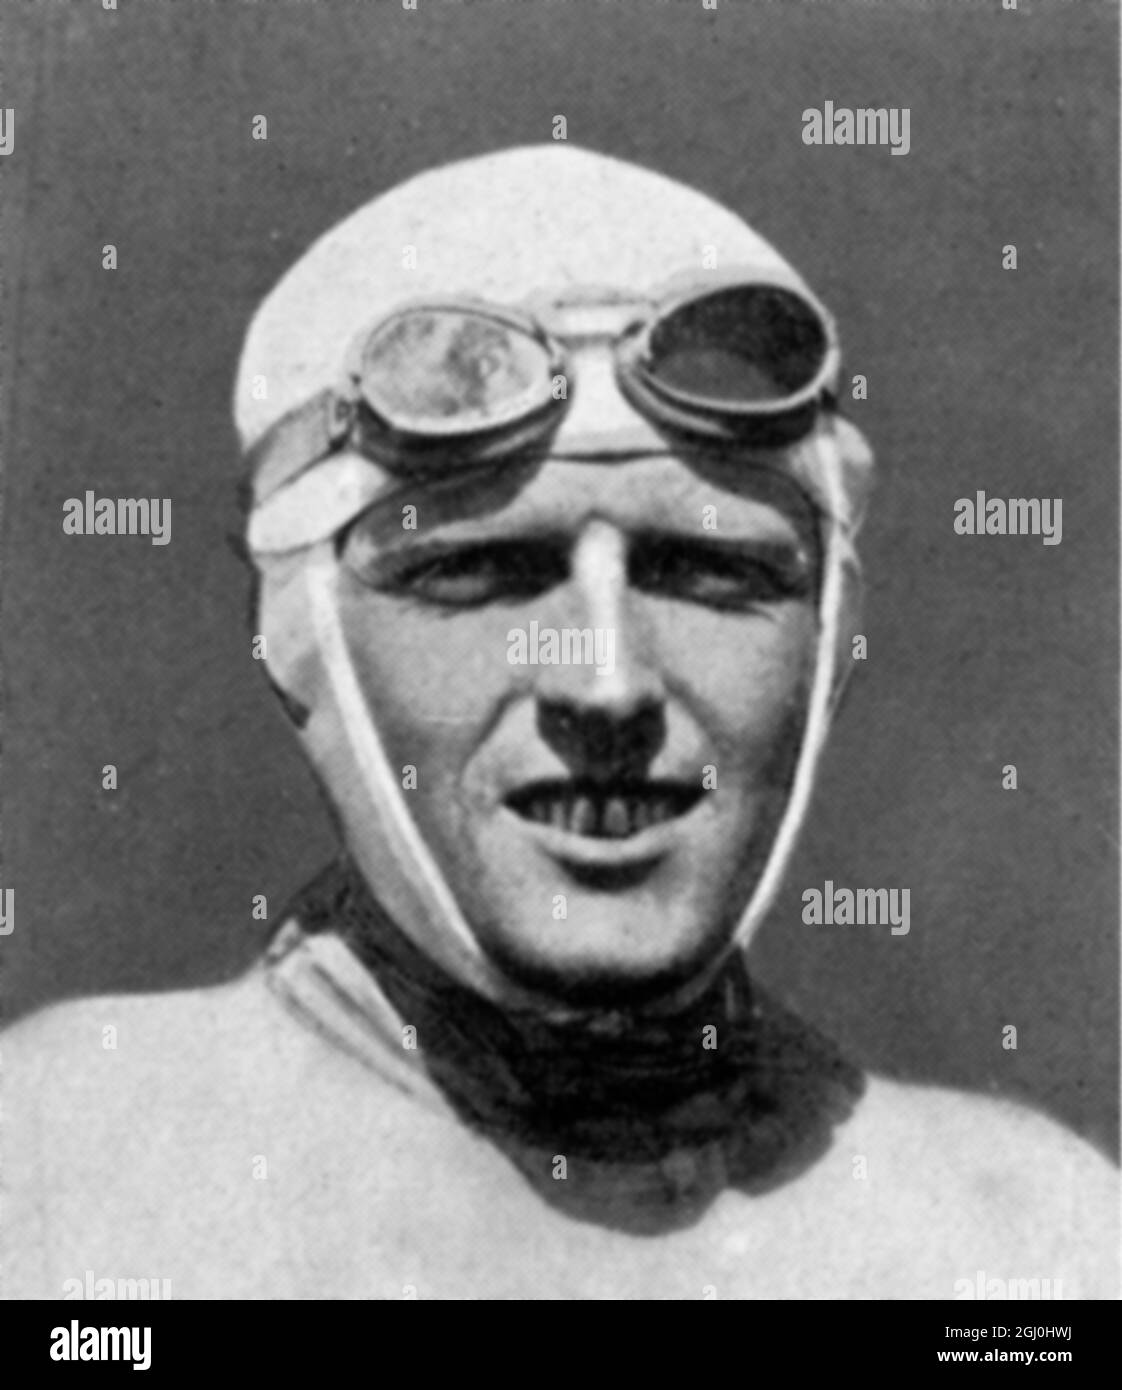 Seagrave, winner of Grand Prix 1923 in his Sunbeam Stock Photo